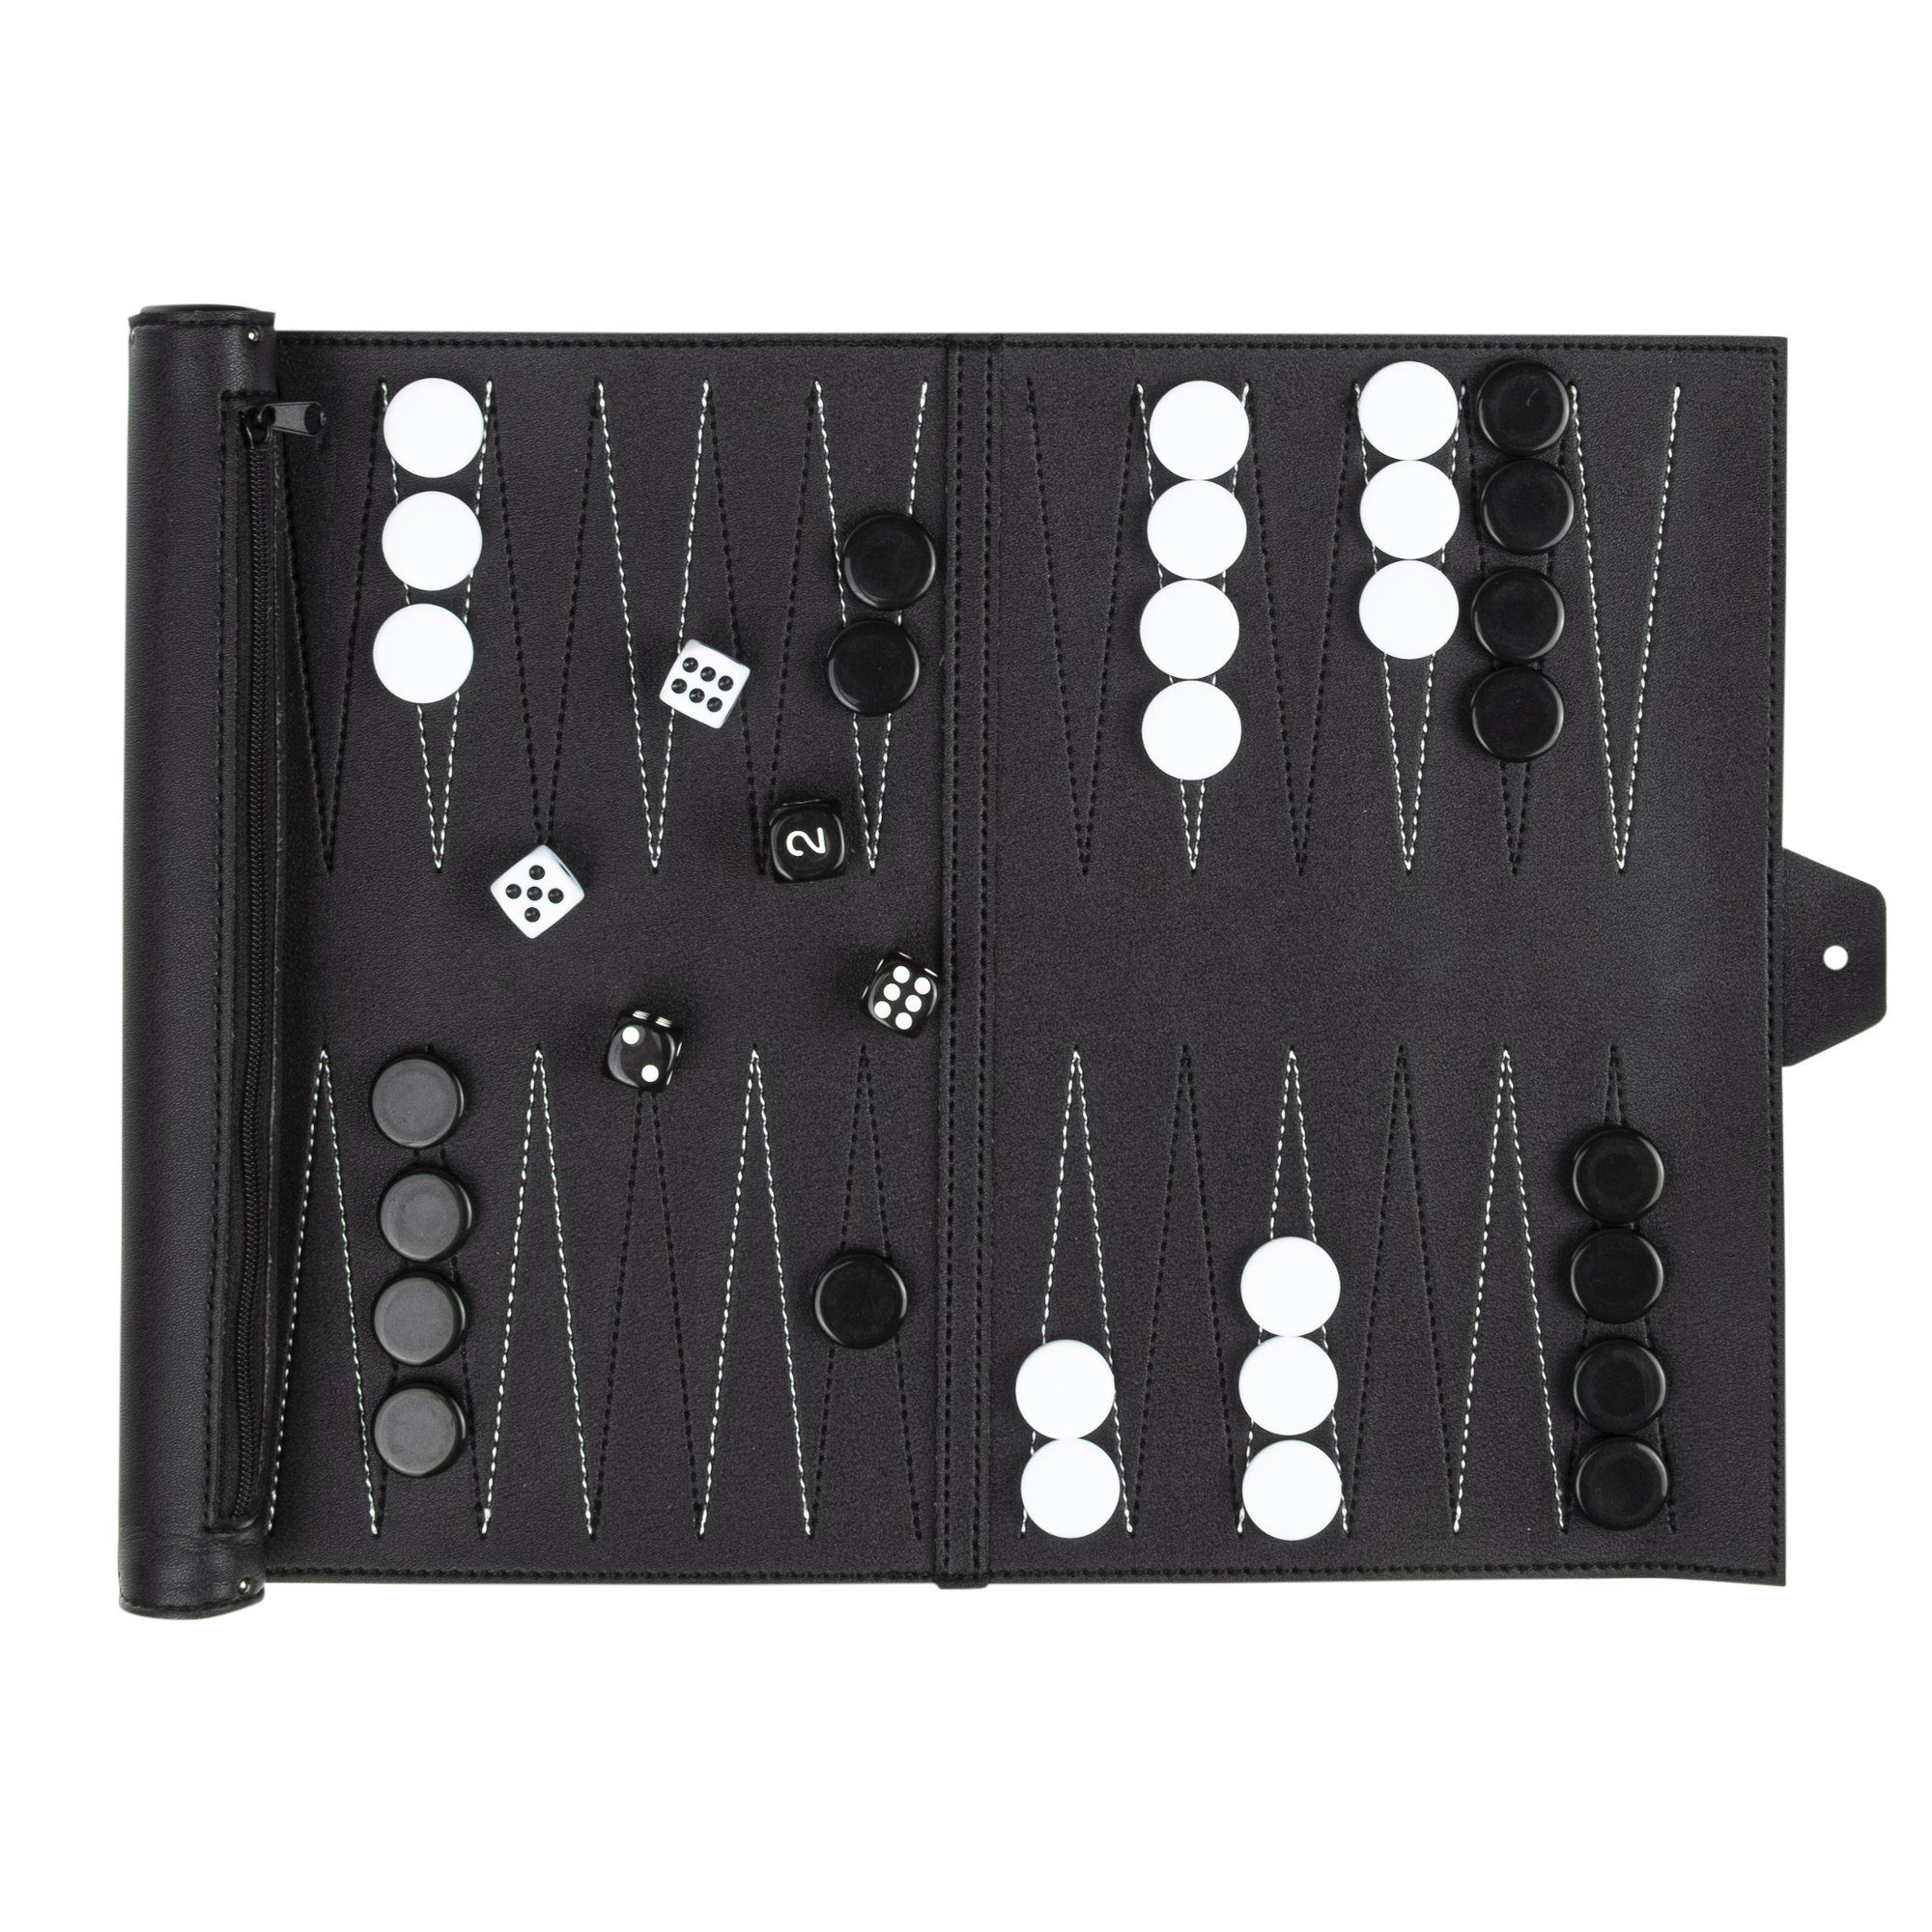 Reisespiel Gravidus Reise-Backgammon Backgammon Reise Kompakt Spiel, Brettspiel